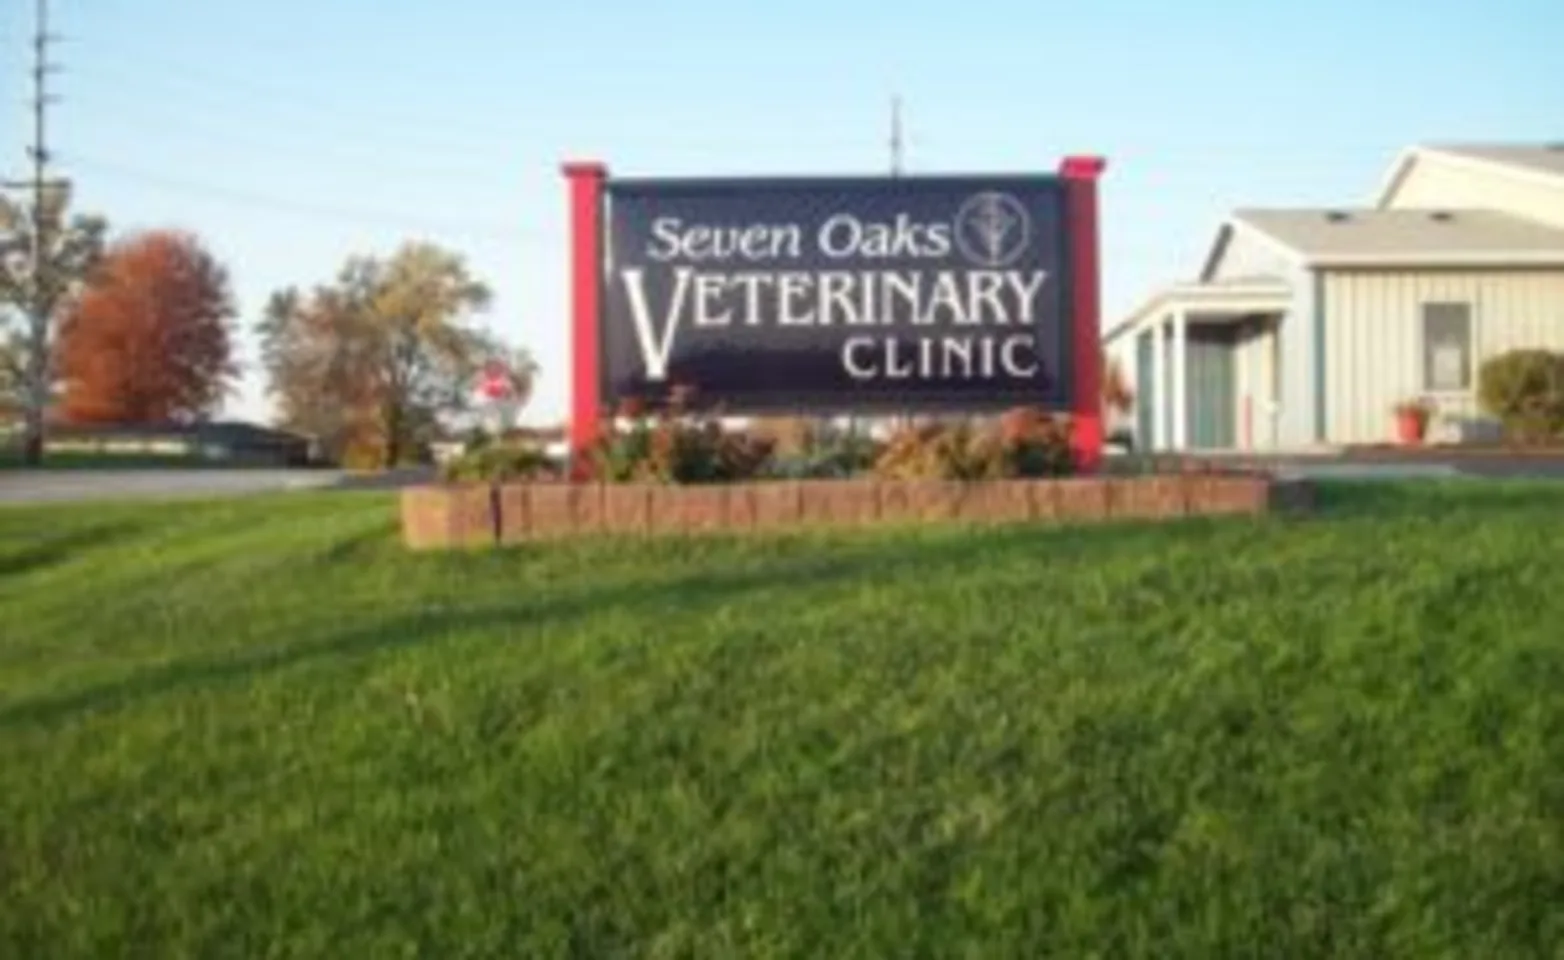 Seven Oaks Veterinary Clinic Sign outside